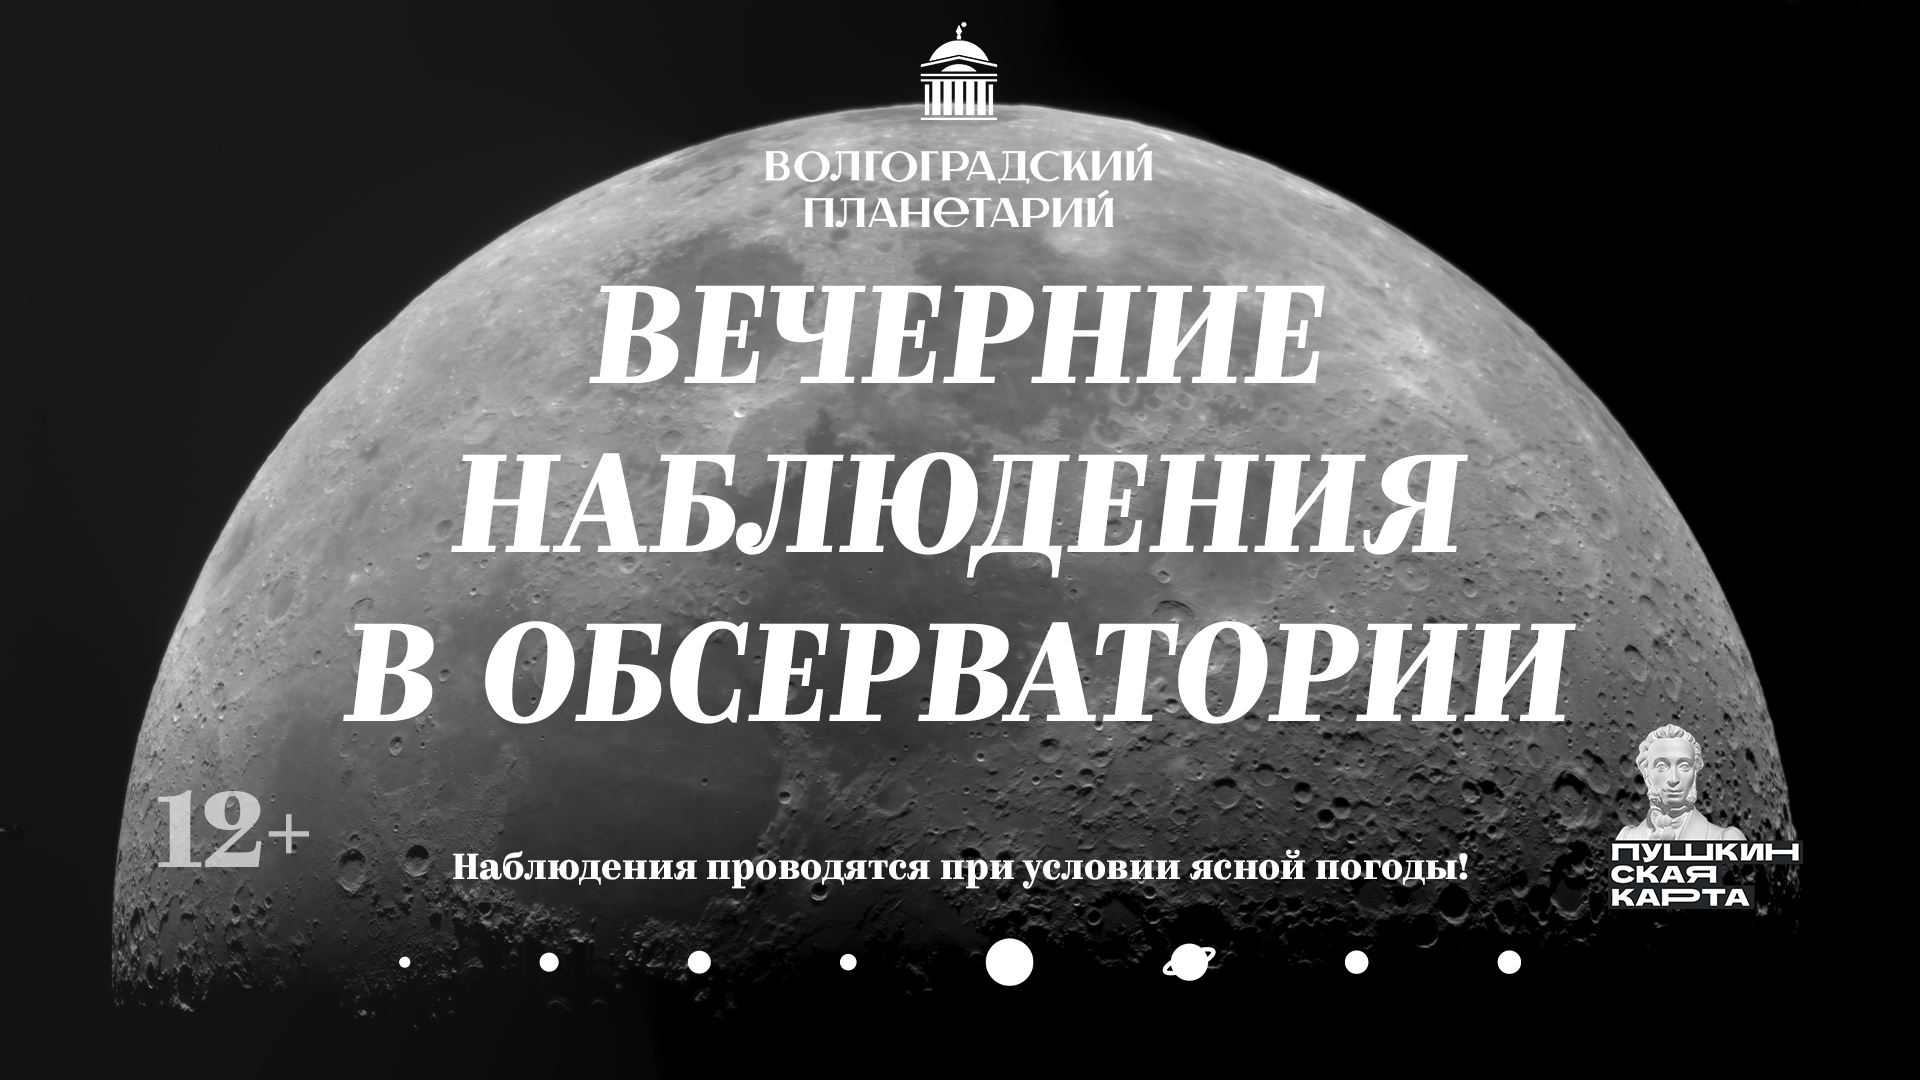 Вечерние наблюдения в обсерватории Волгоградского планетария